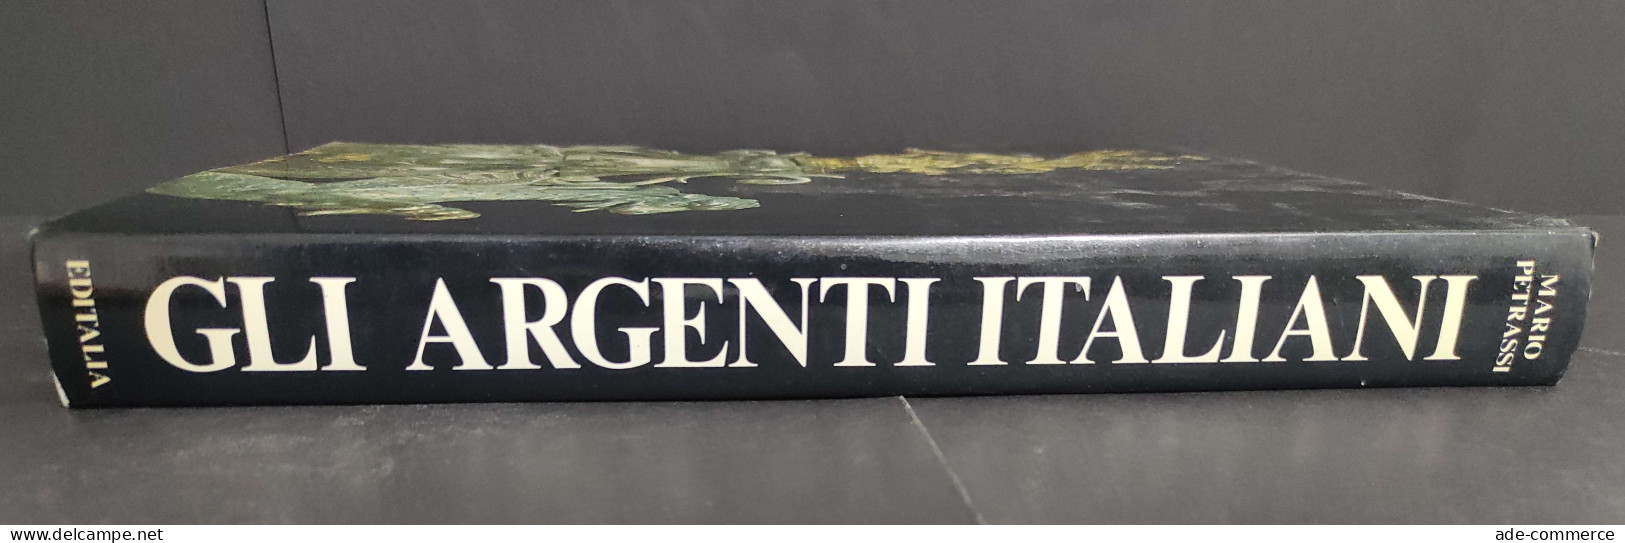 Gli Argenti Italiani - M. Petrassi - Ed. Editalia - 1984                                                                 - Arts, Antiquités